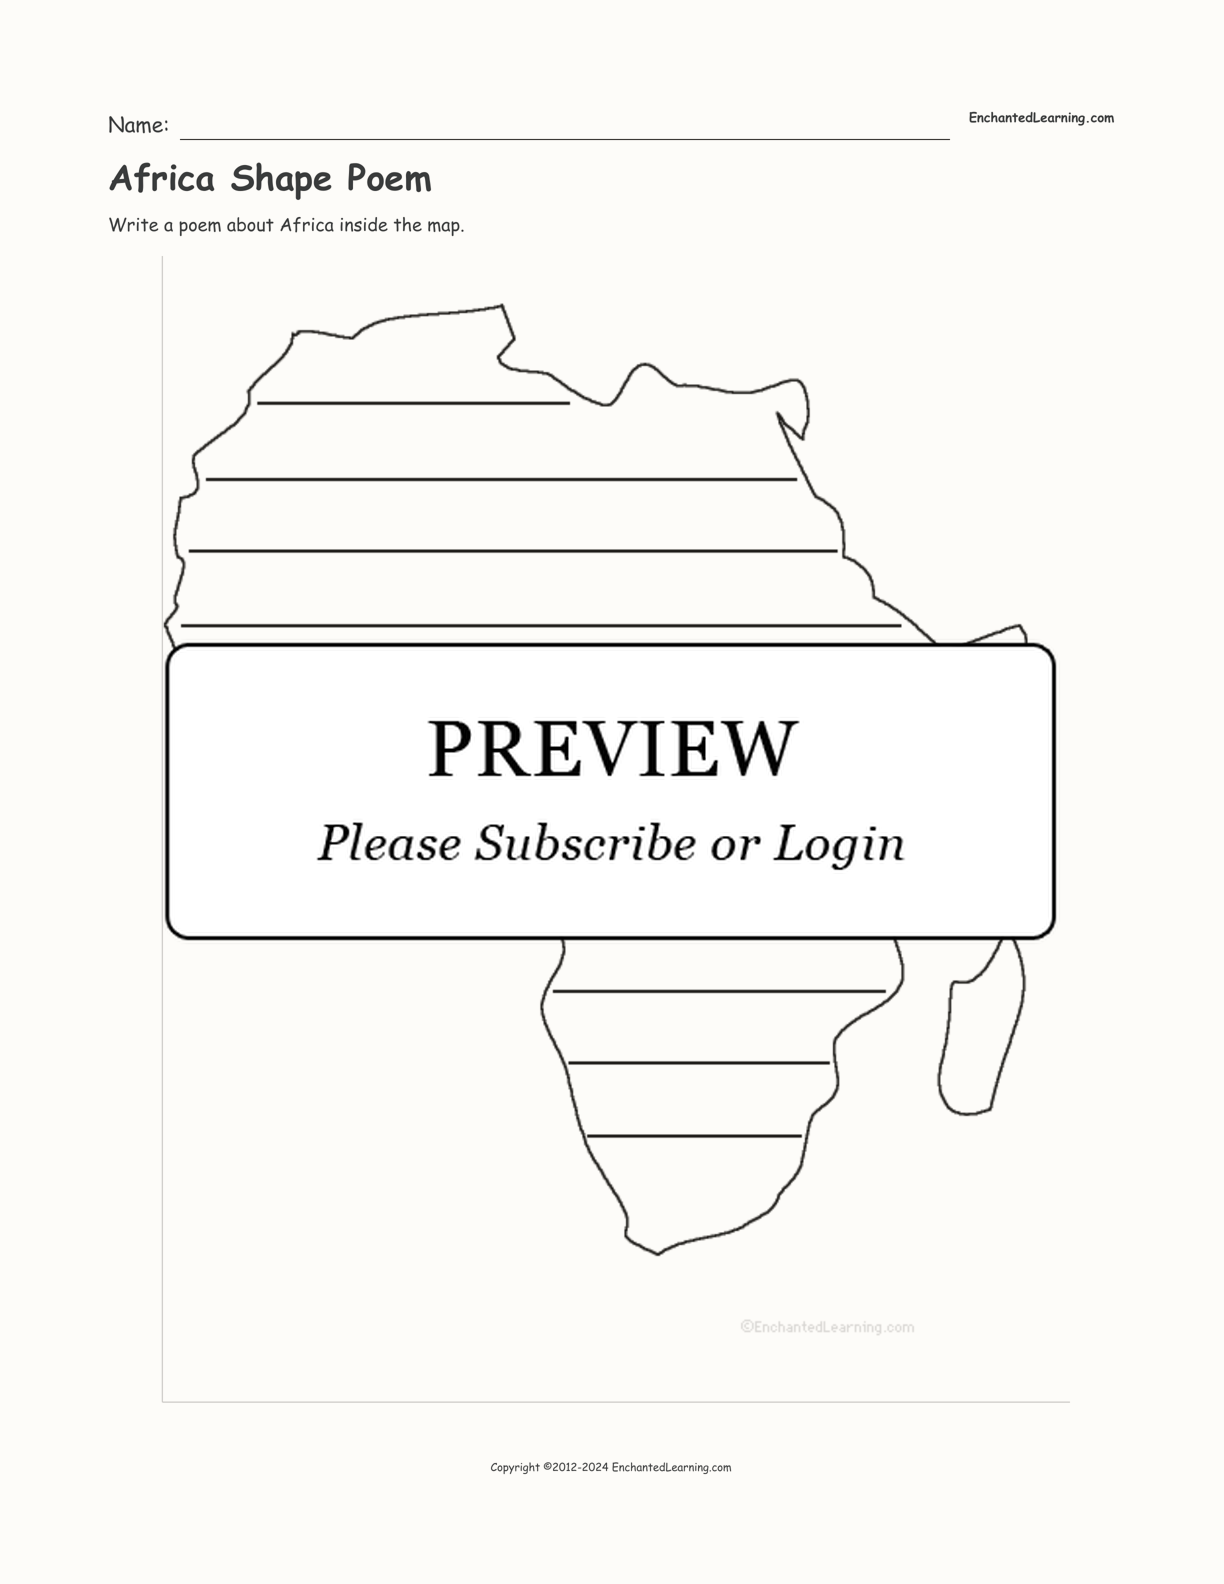 Africa Shape Poem interactive worksheet page 1